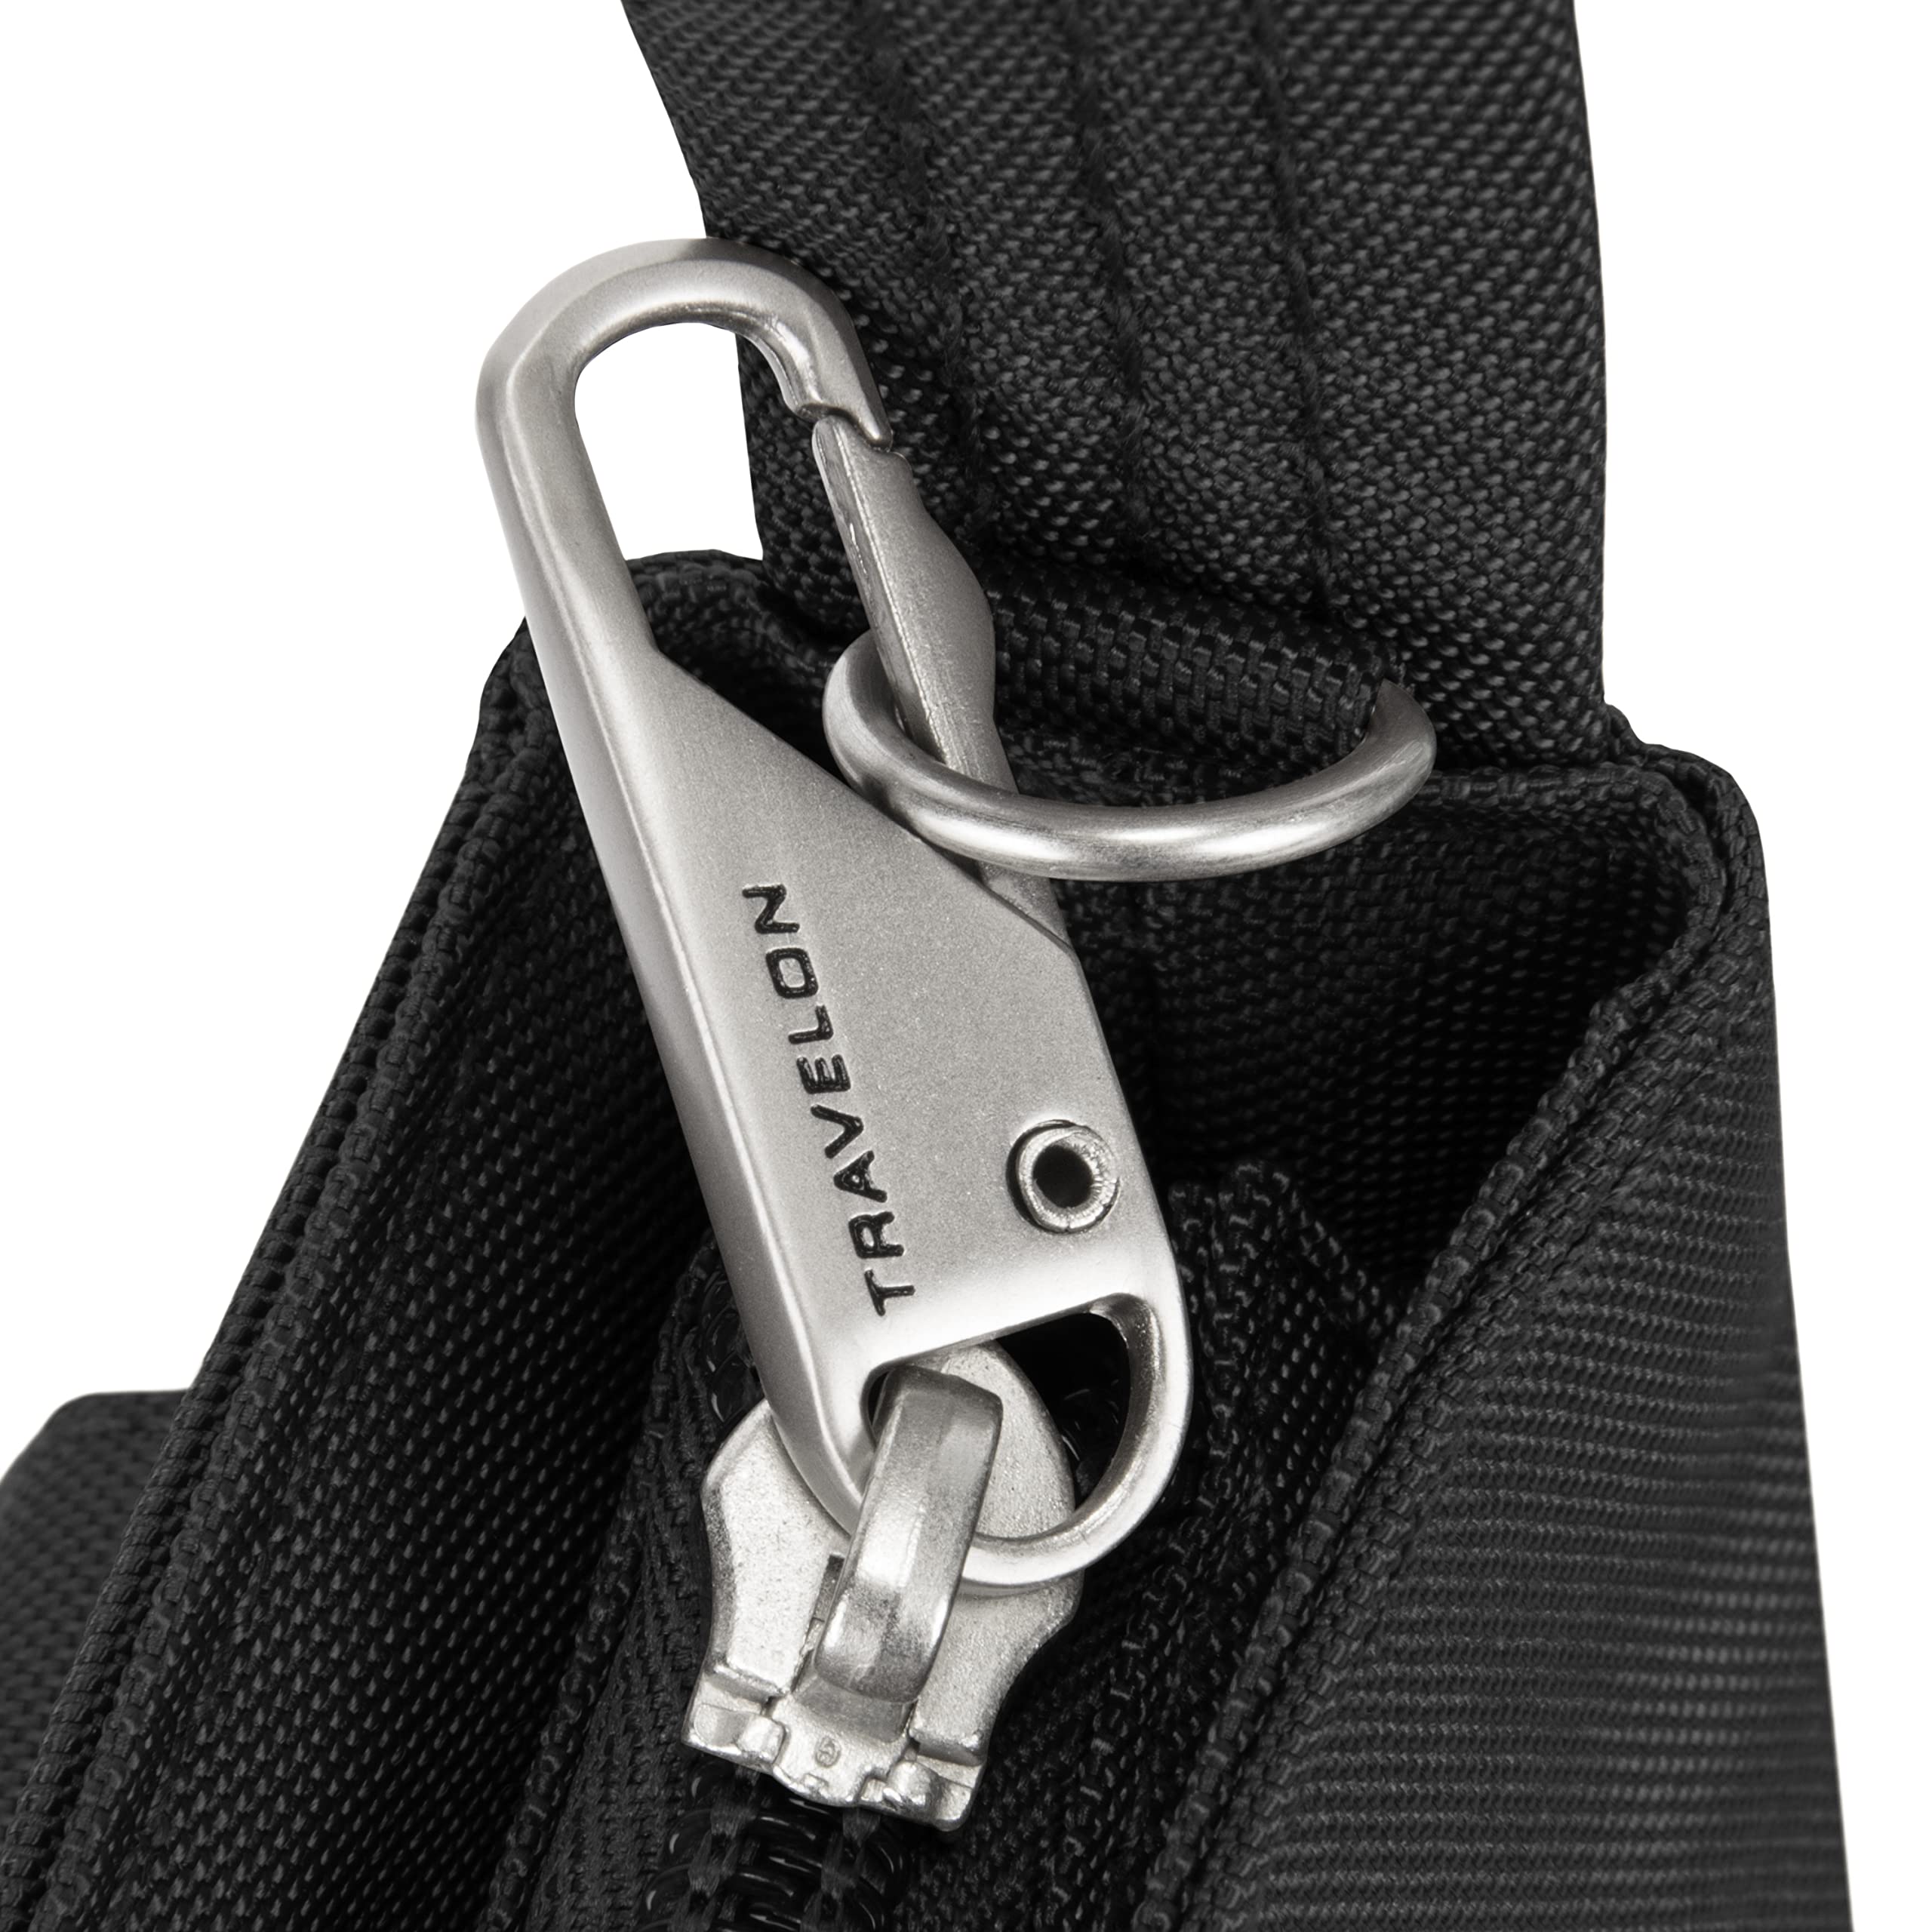 Travelon Anti-Theft Classic Mini Shoulder Bag, Black, One Size, 8.5 x 8.5 x 2